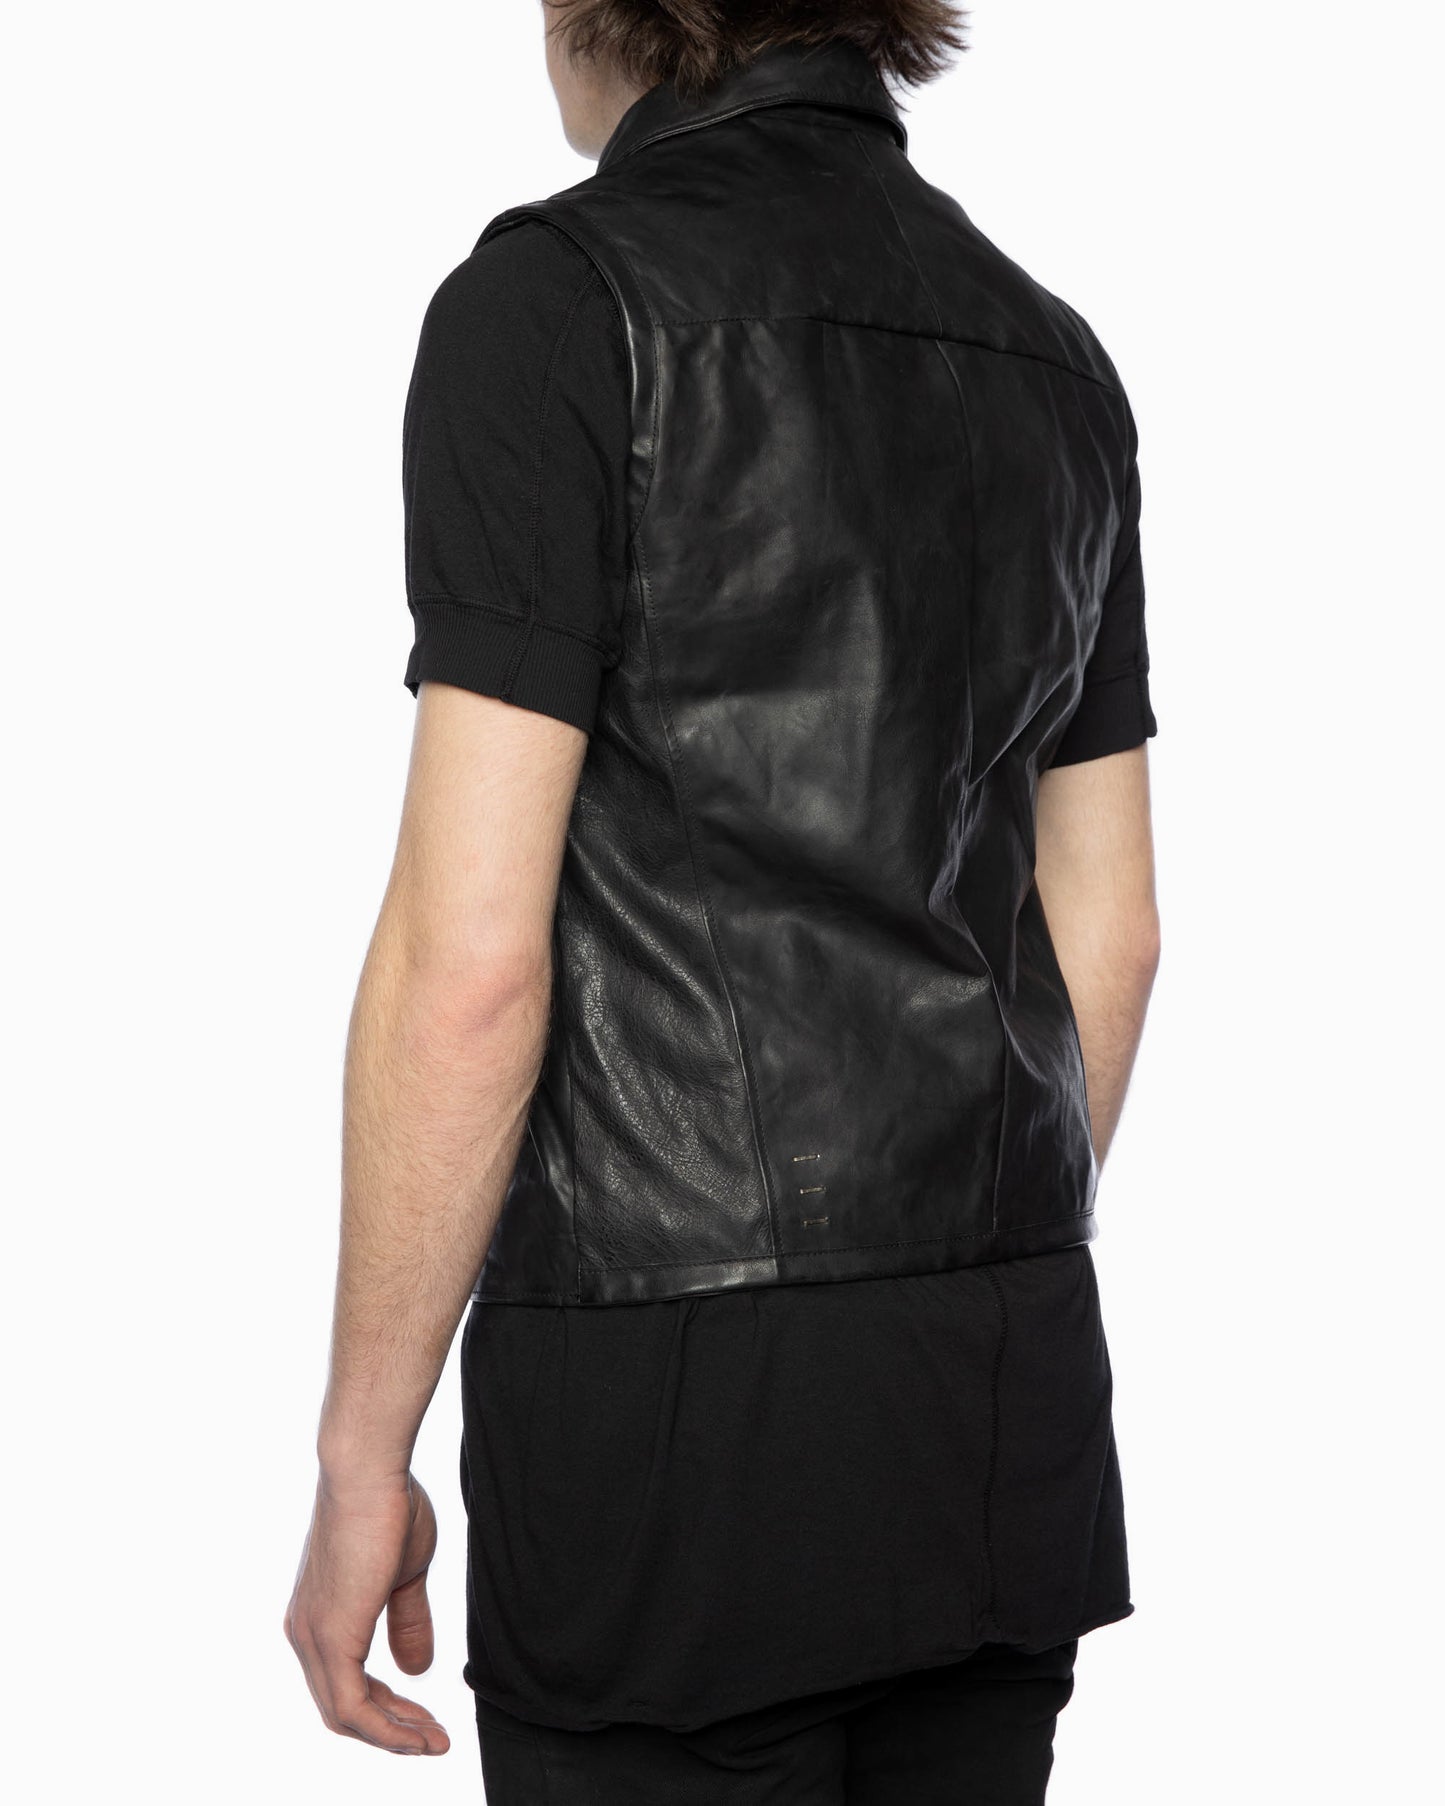 Black Sleeveless Horse Leather Perfecto Vest Jacket